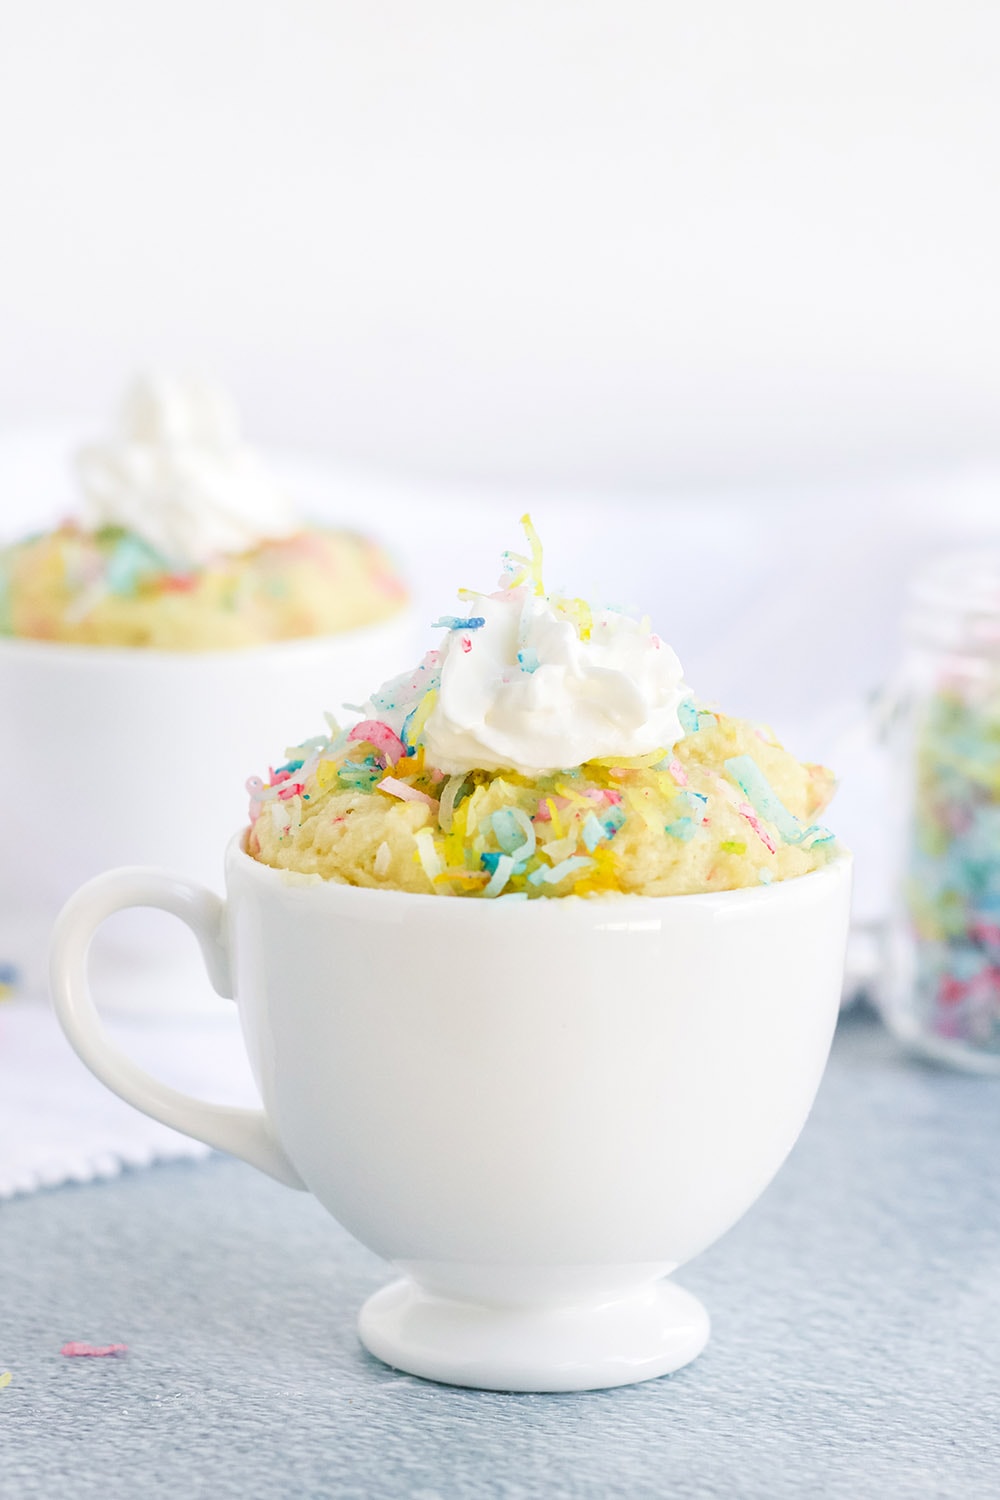 Vanilla funfetti cake with whipped cream in a mug.